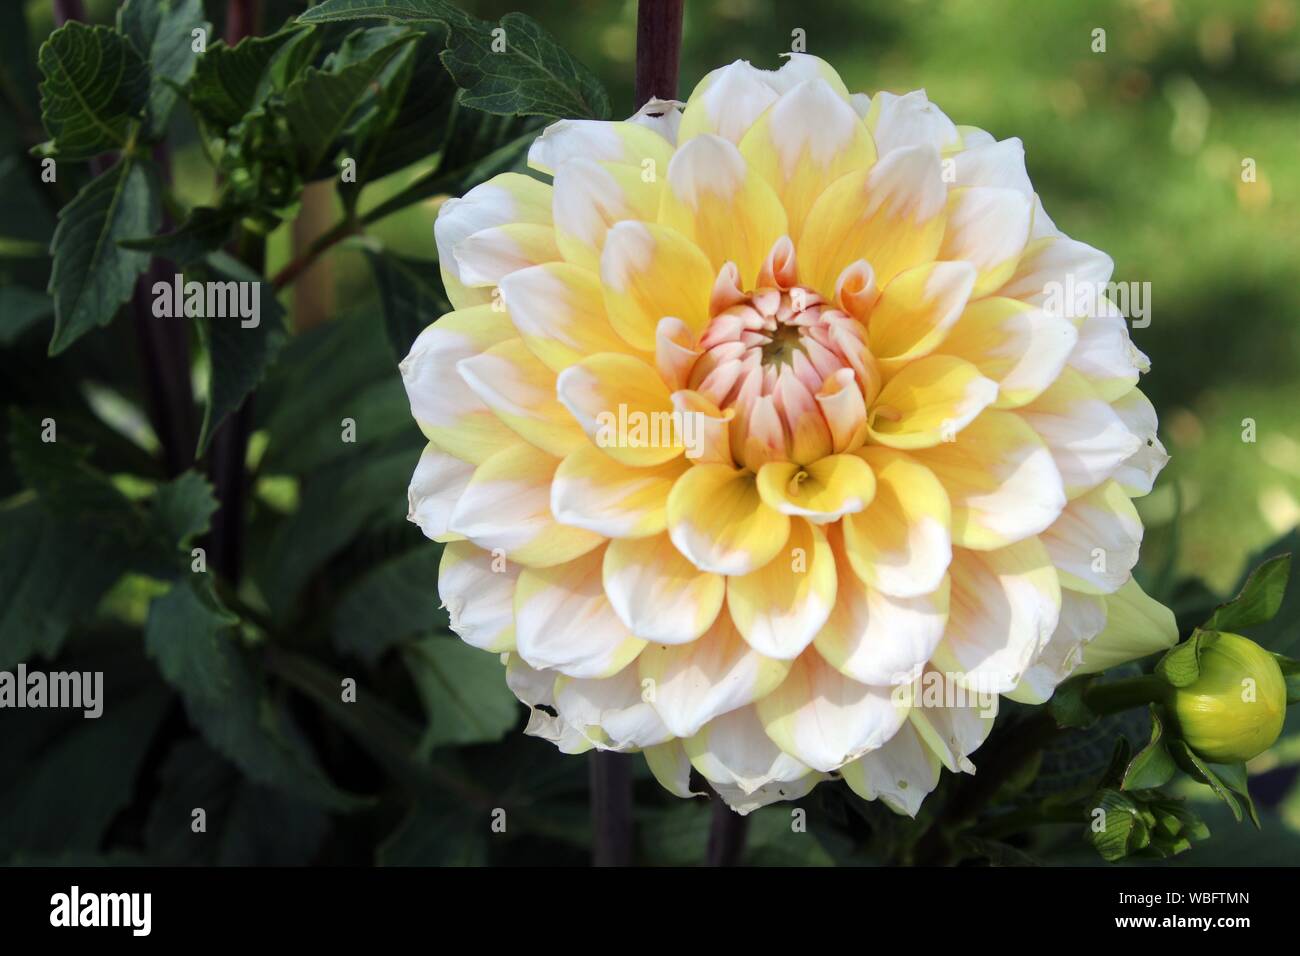 Germany Berlin Blume/ Flower/ Dahlie Stock Photo